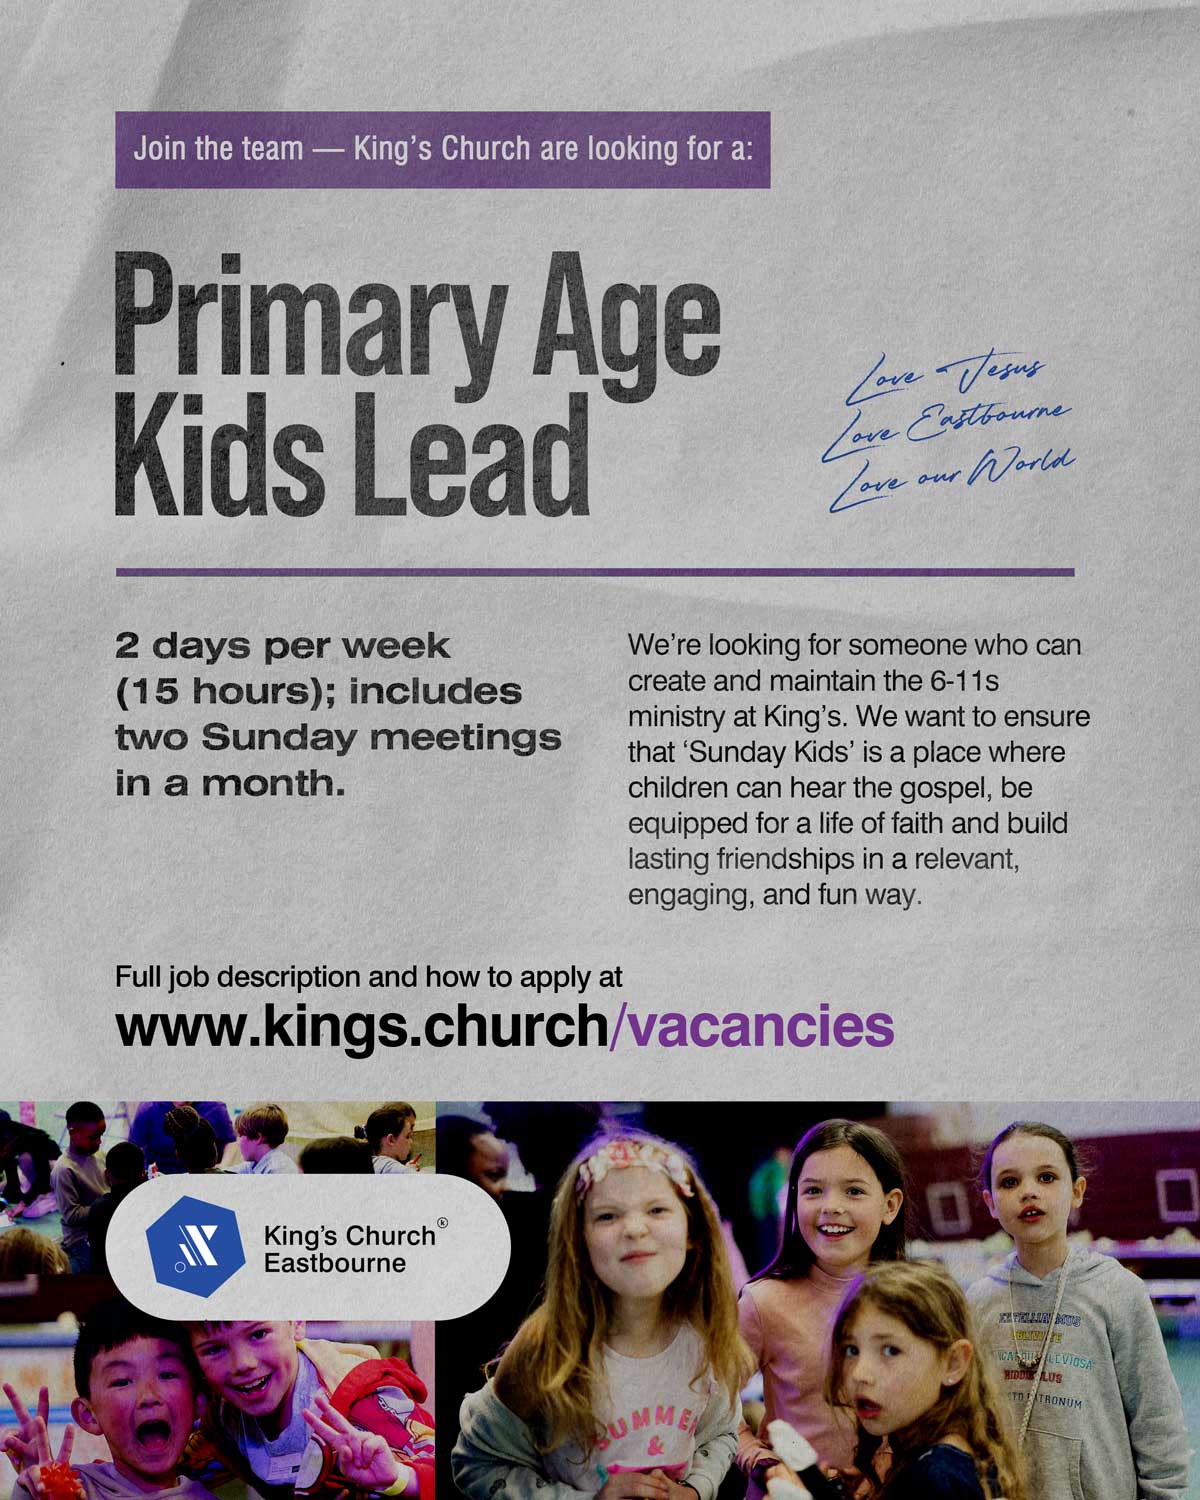 Primary Age Kids Lead